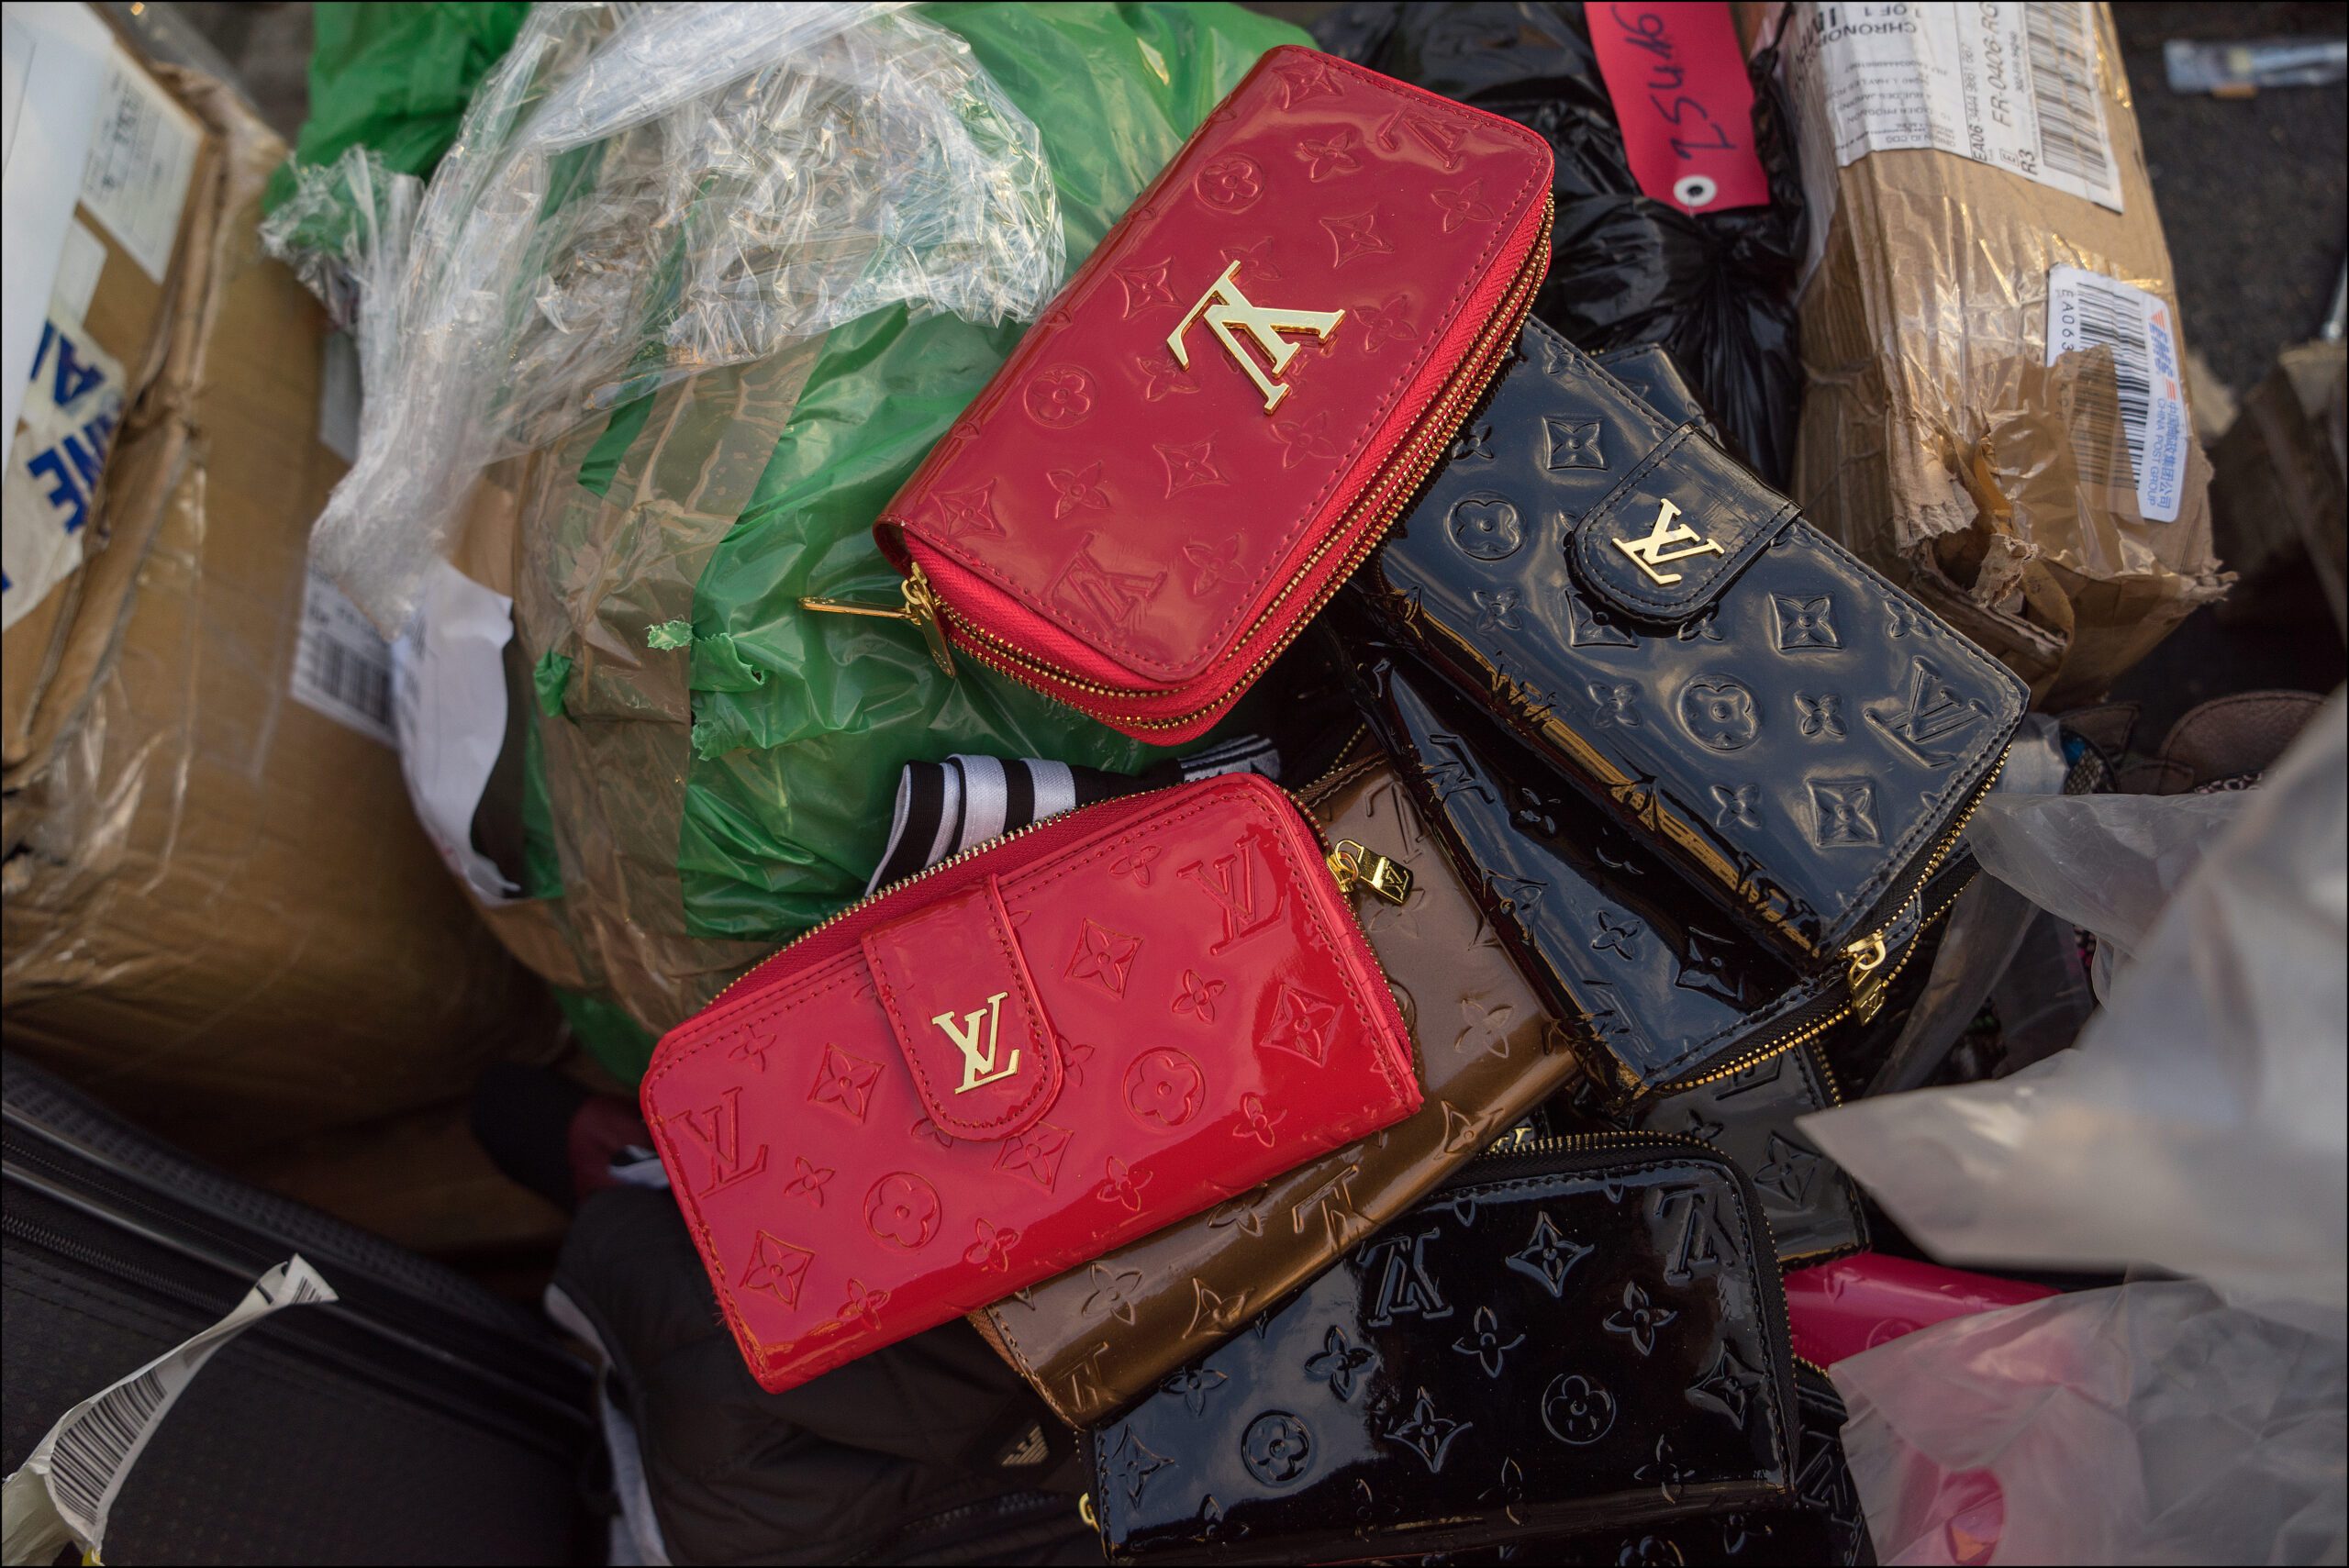 Nearly half a million dollars in counterfeit Louis Vuitton belts